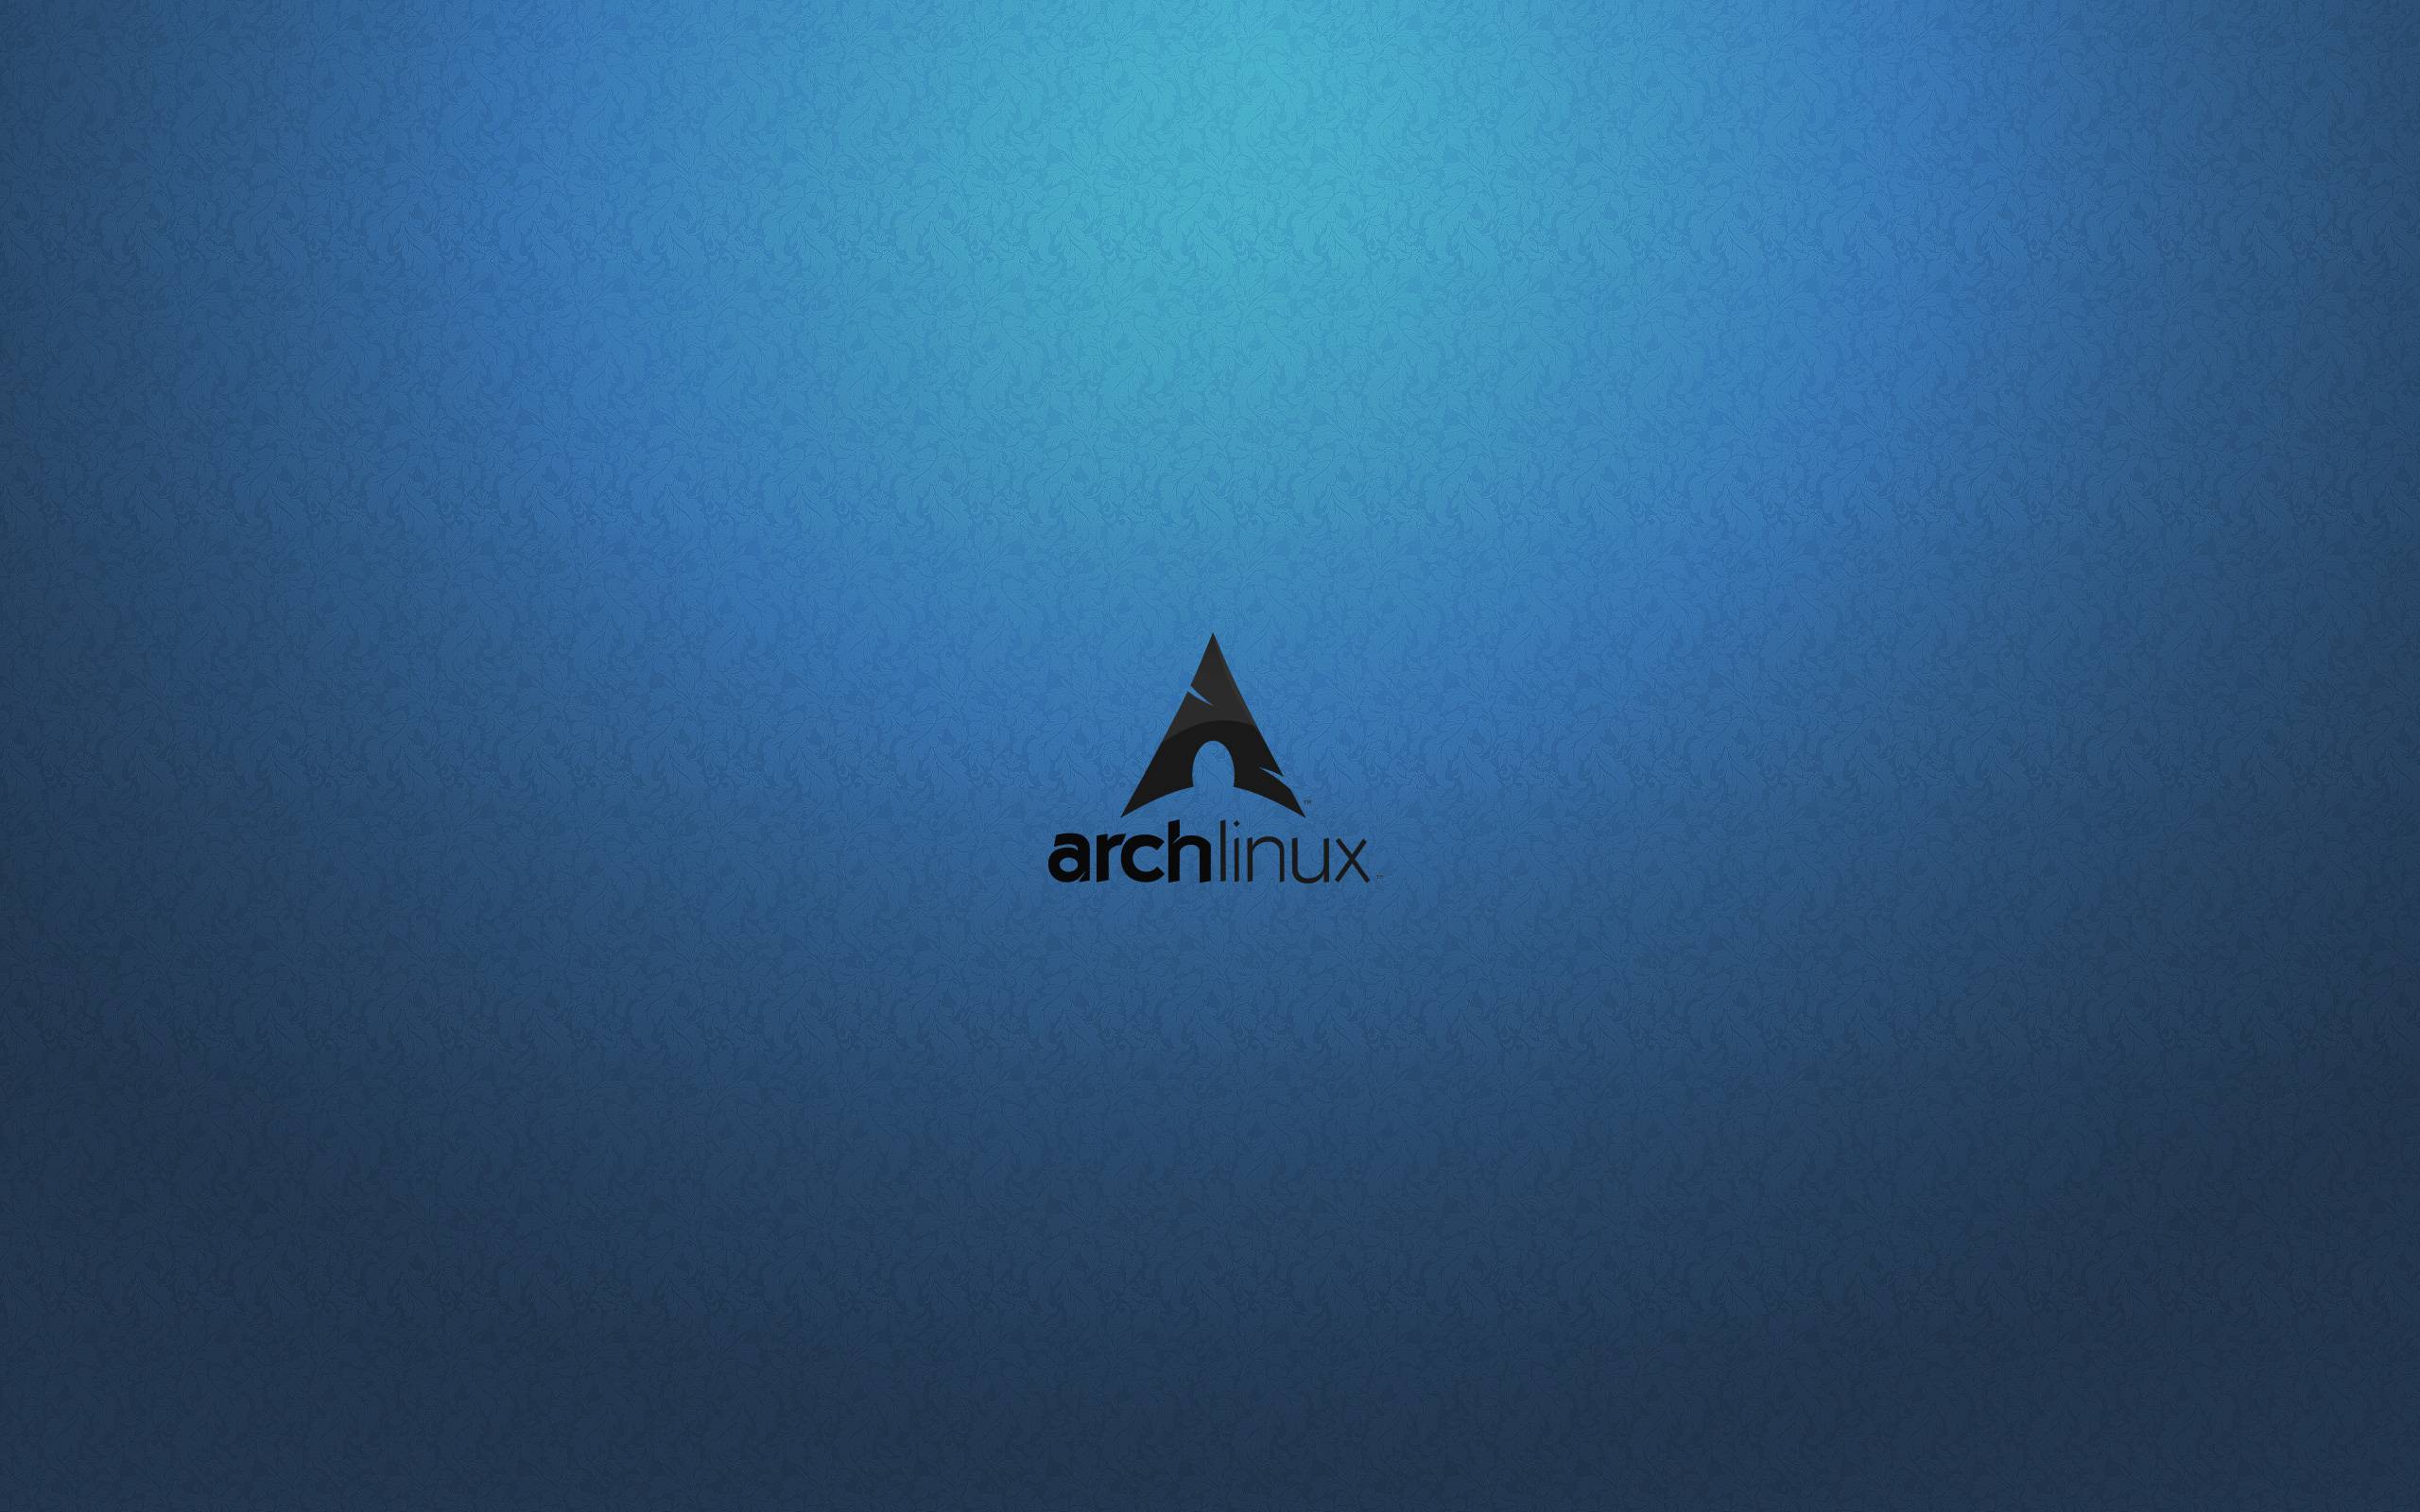 Arch Linux Wallpaper HD wallpaper search